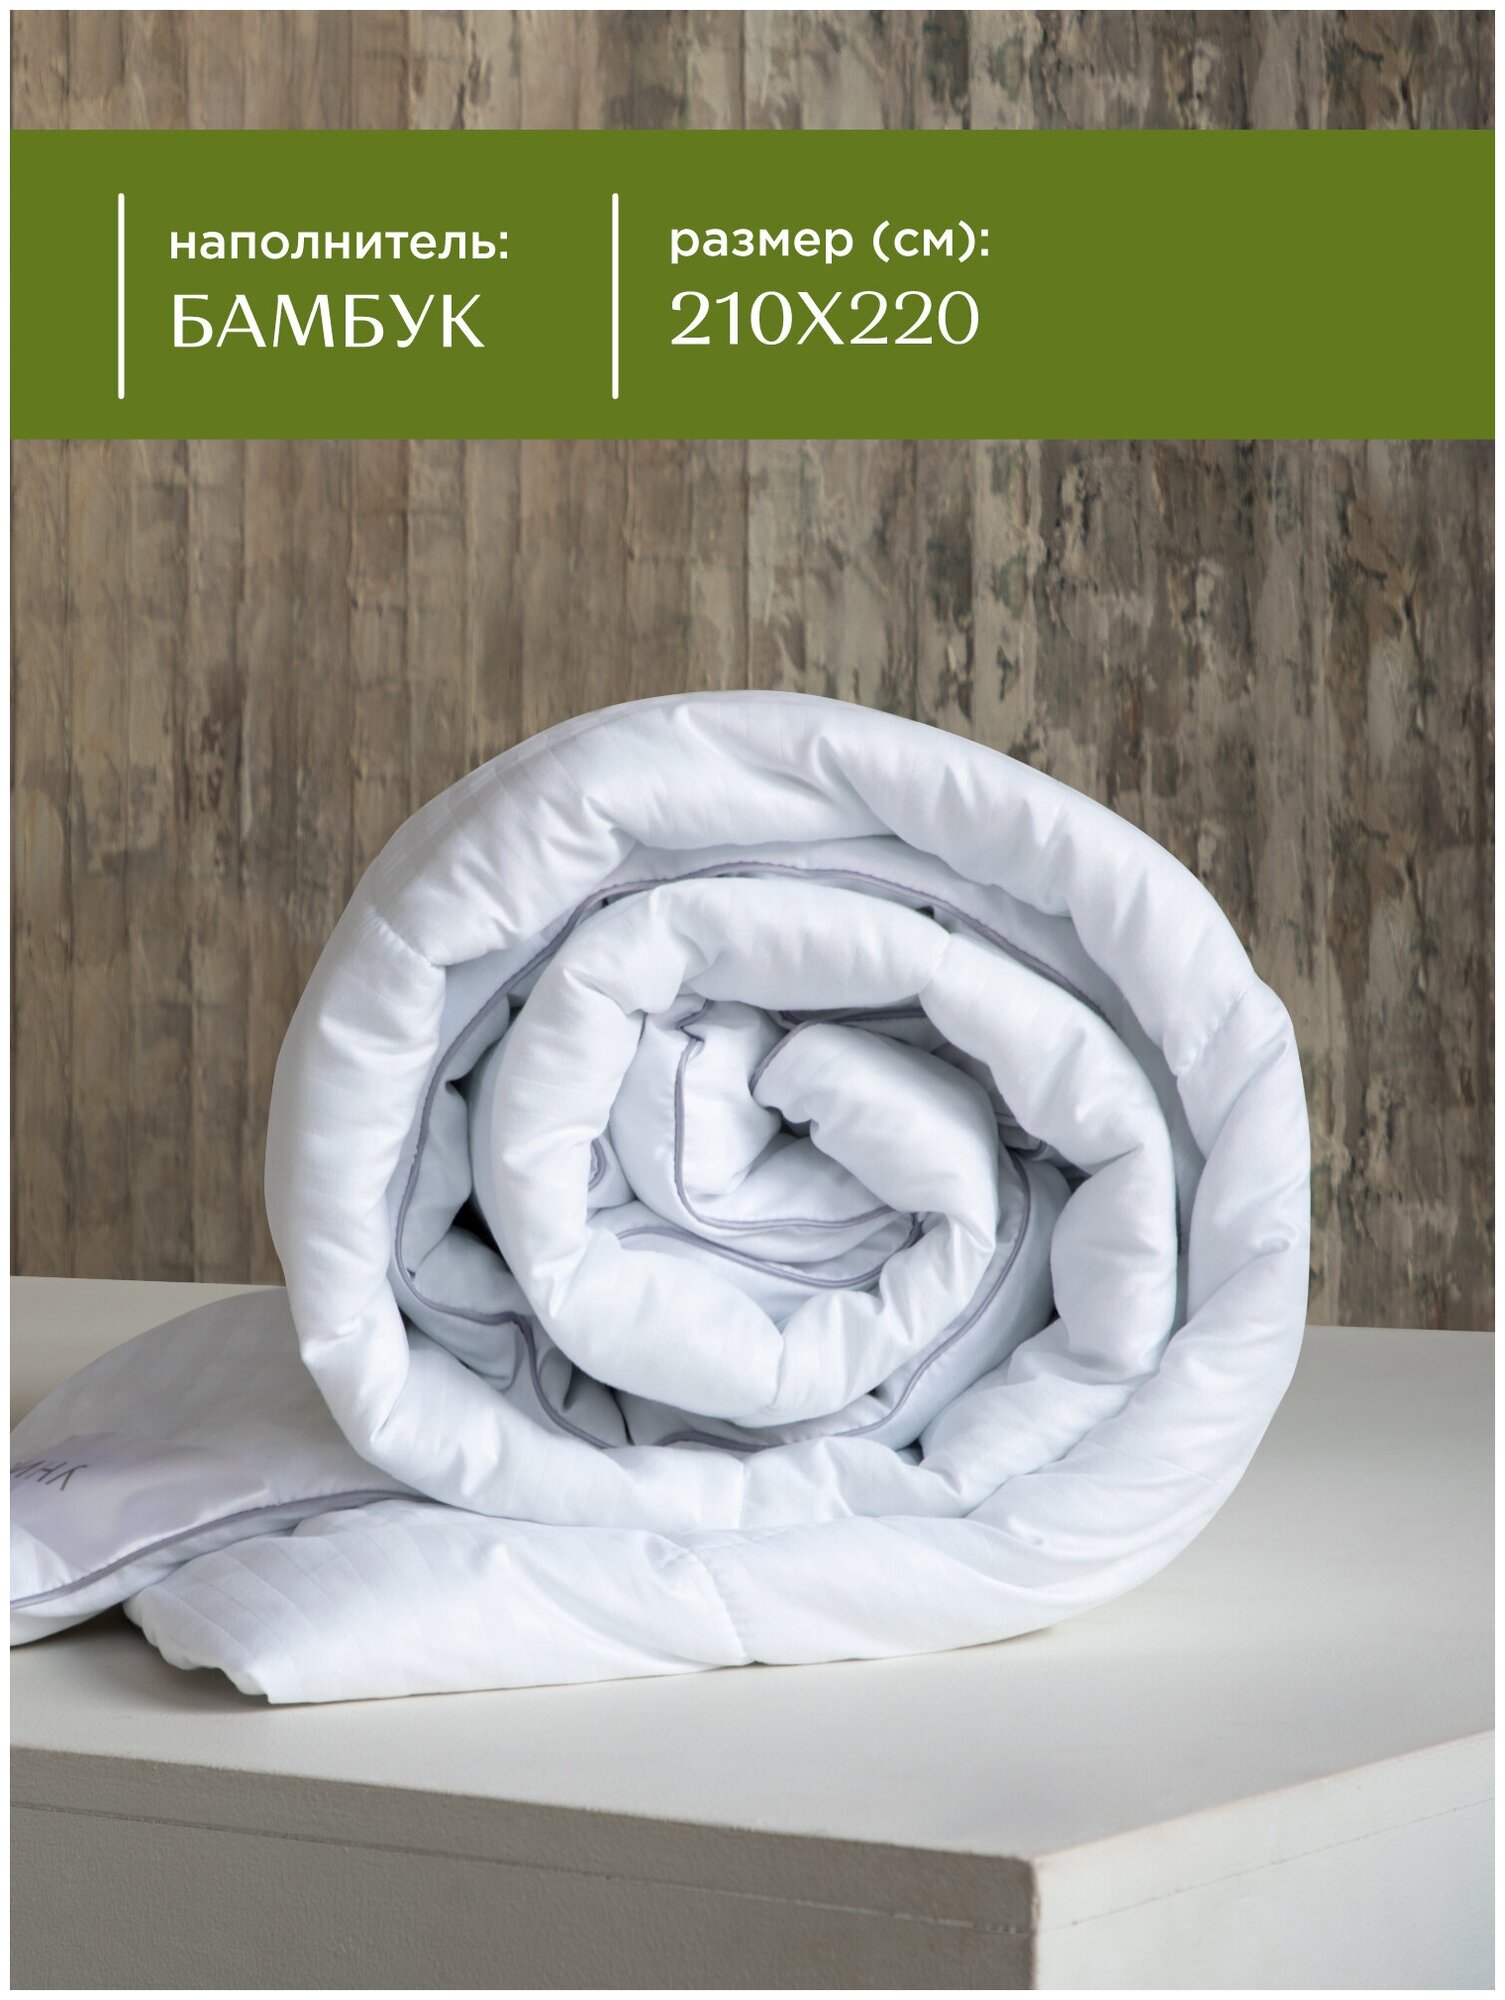 Одеяло / одеяло 210*220 зимнее / летнее одеяло /одеяло евро летнее / одеяло зимнее "Унисон" Atmosphere 210х220 бамбук арт. 85